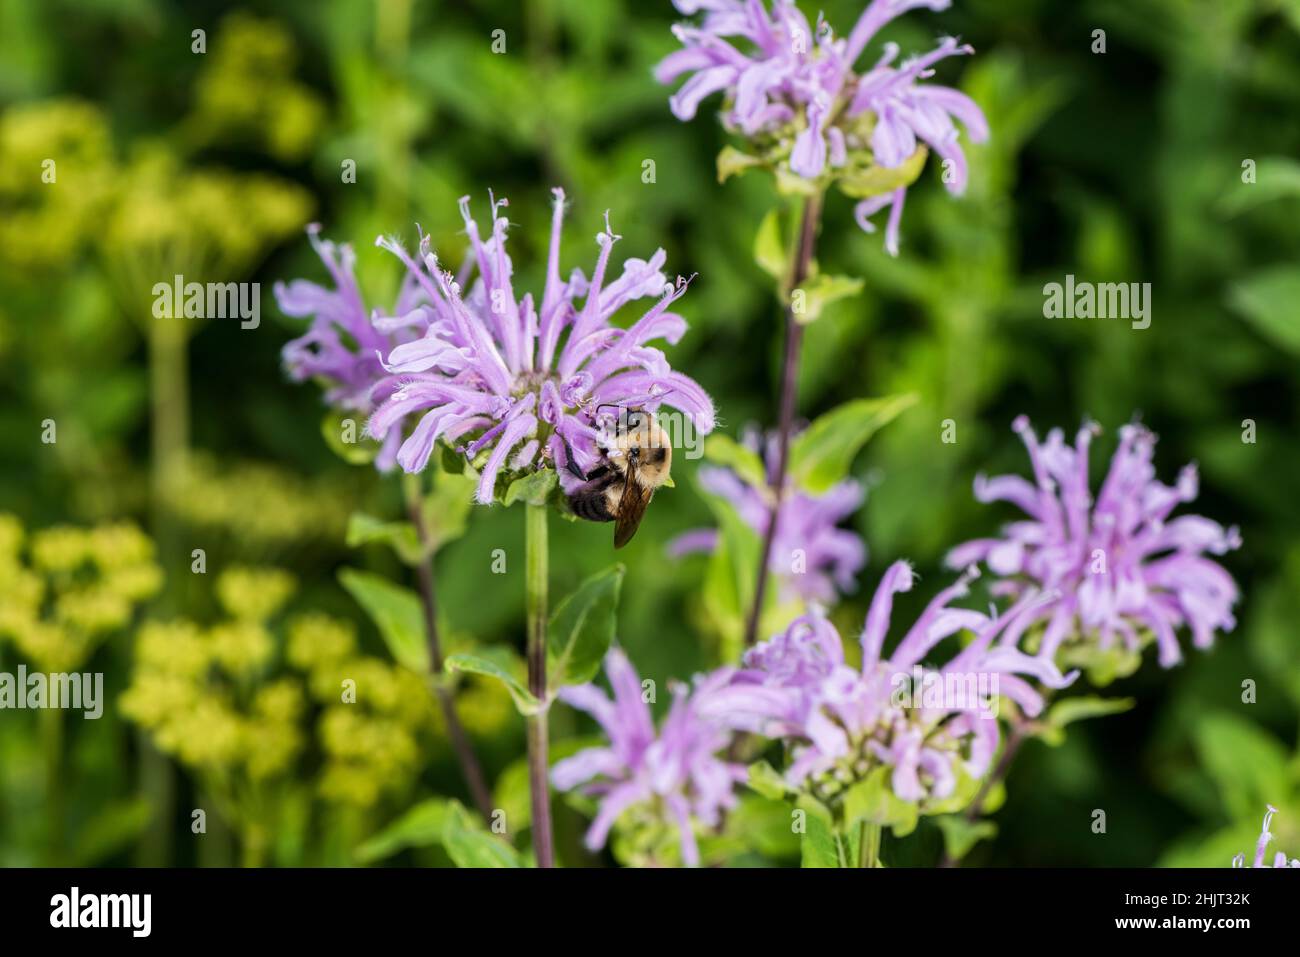 Bumblebee on Bee balm (Lamiaceae) Stock Photo